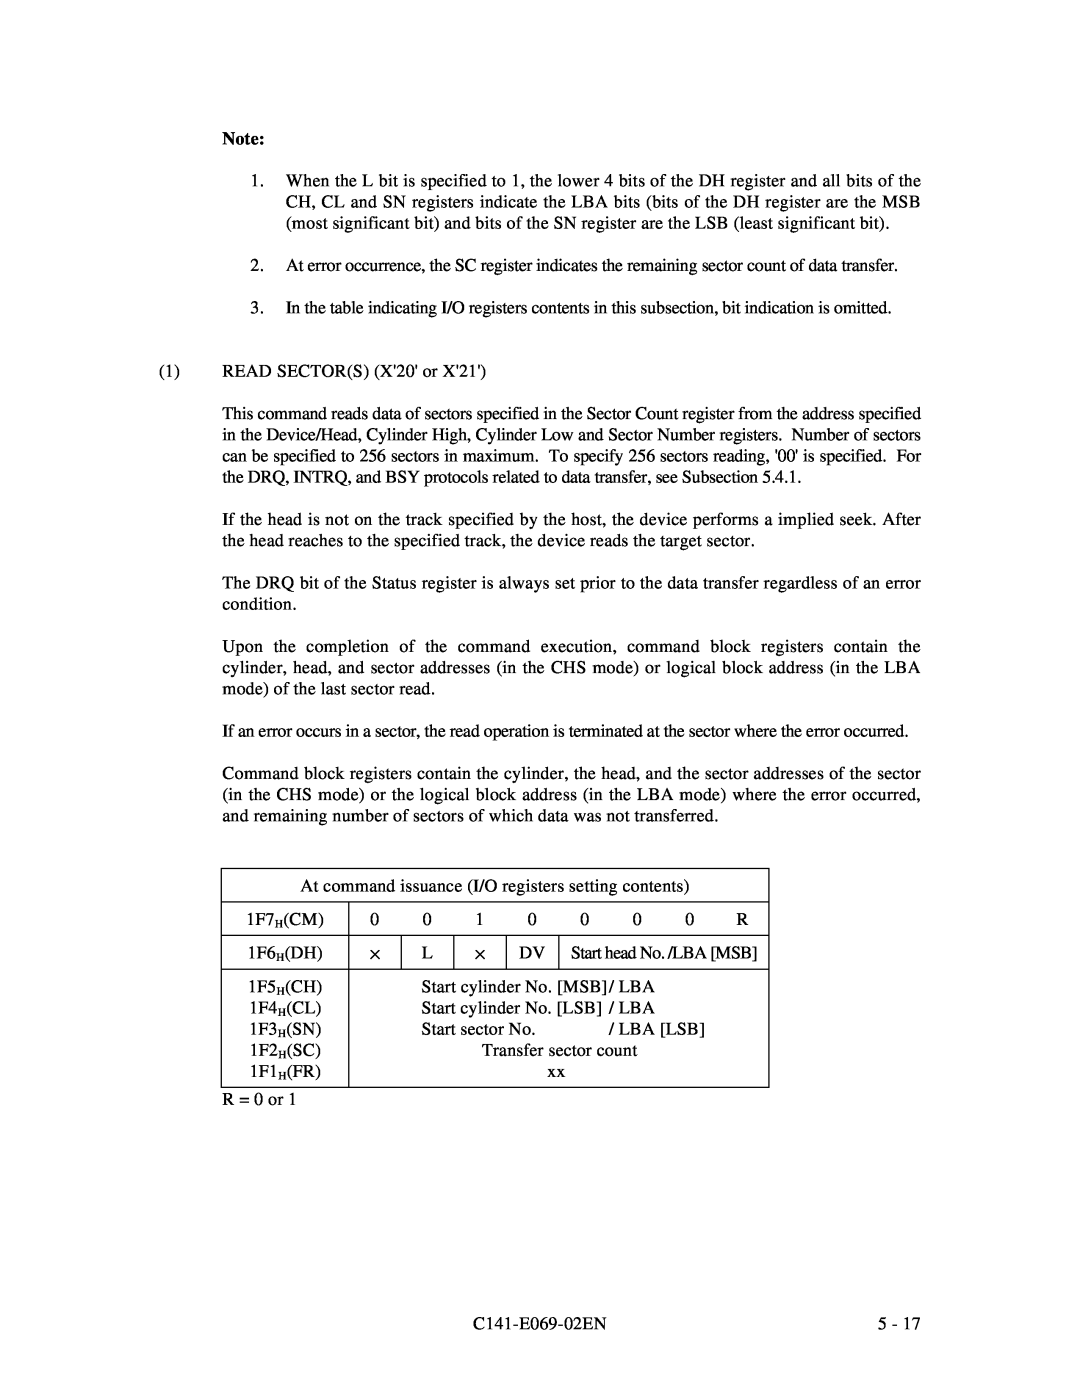 Fujitsu MPD3XXXAT manual READ SECTORS X20 or, At command issuance I/O registers setting contents, 1F7 HCM, 1F6 HDH, 1F5 HCH 